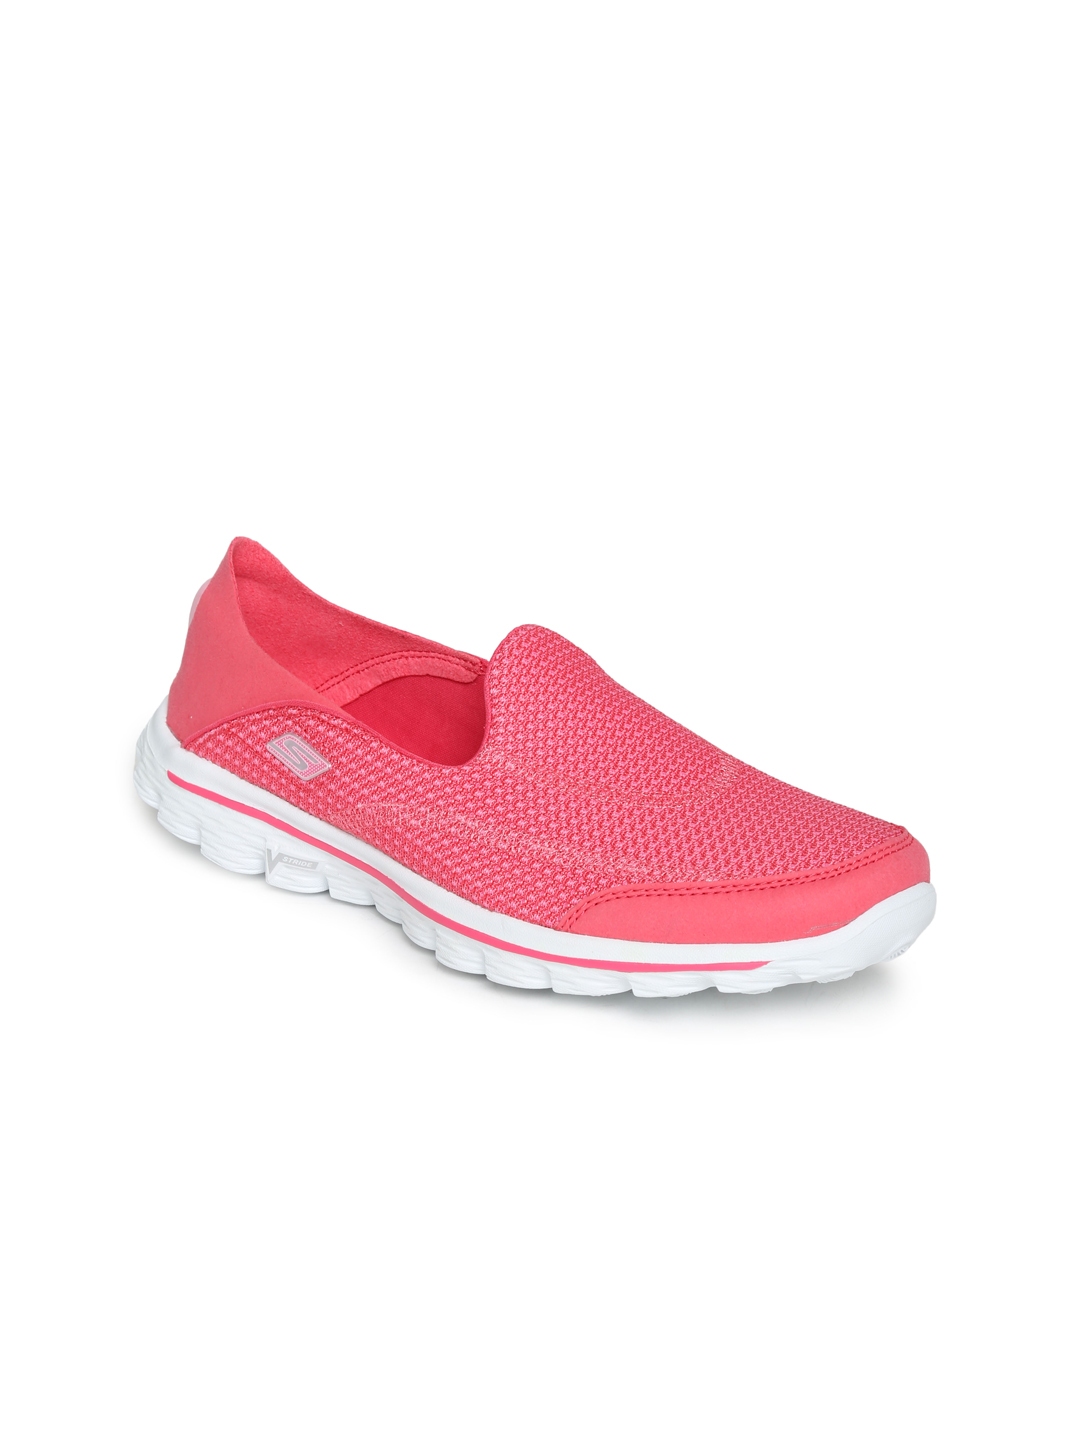 Skechers Women Pink GOwalk 2 Convertible Walking Shoes - Sports Shoes for Women 439325 | Myntra